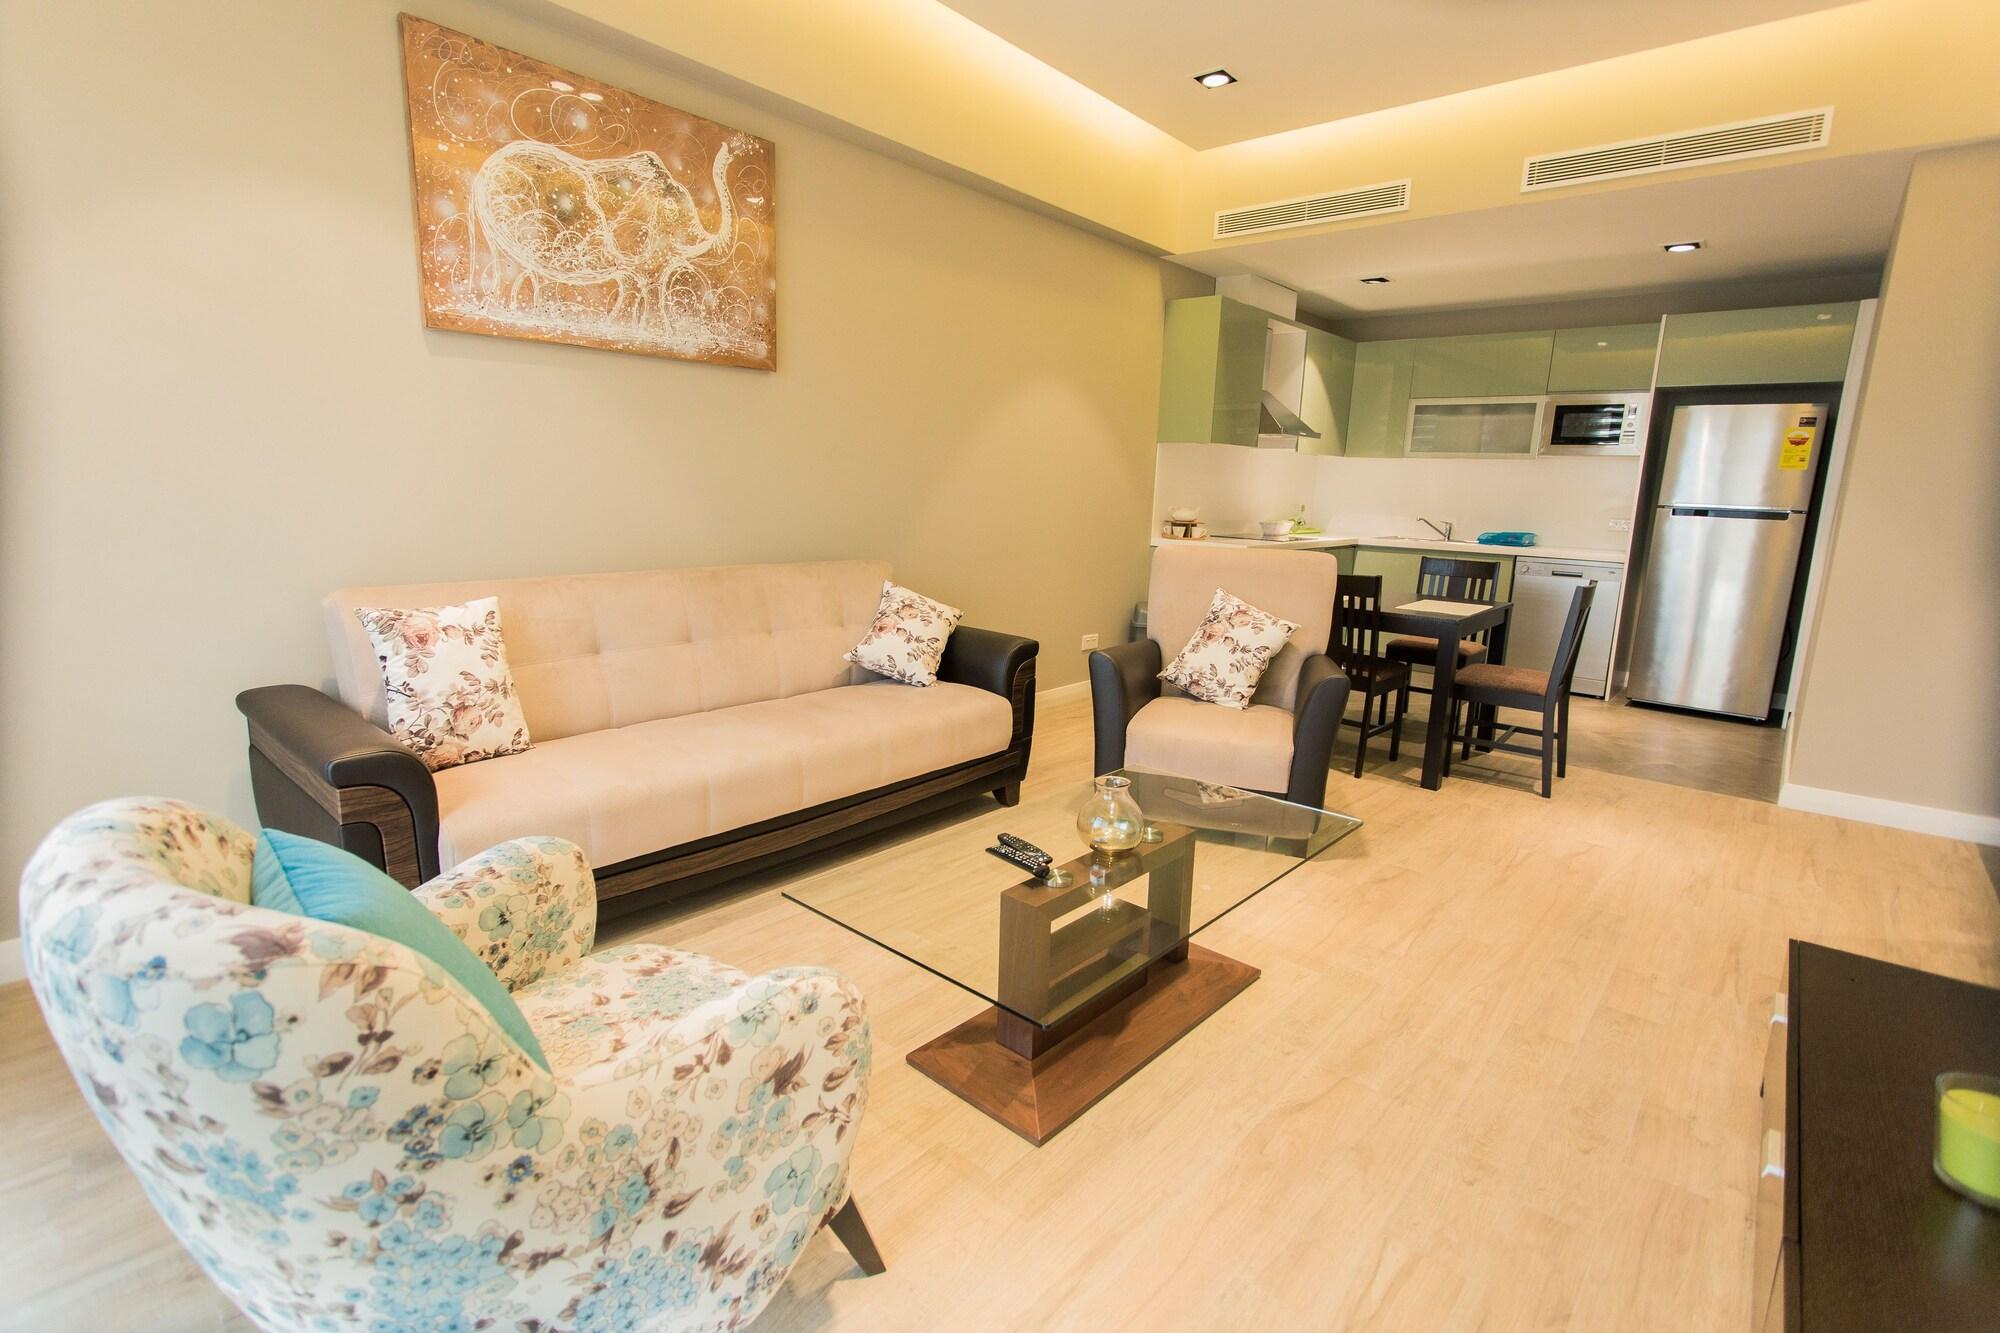 Accra Luxury Apartments Cantonments